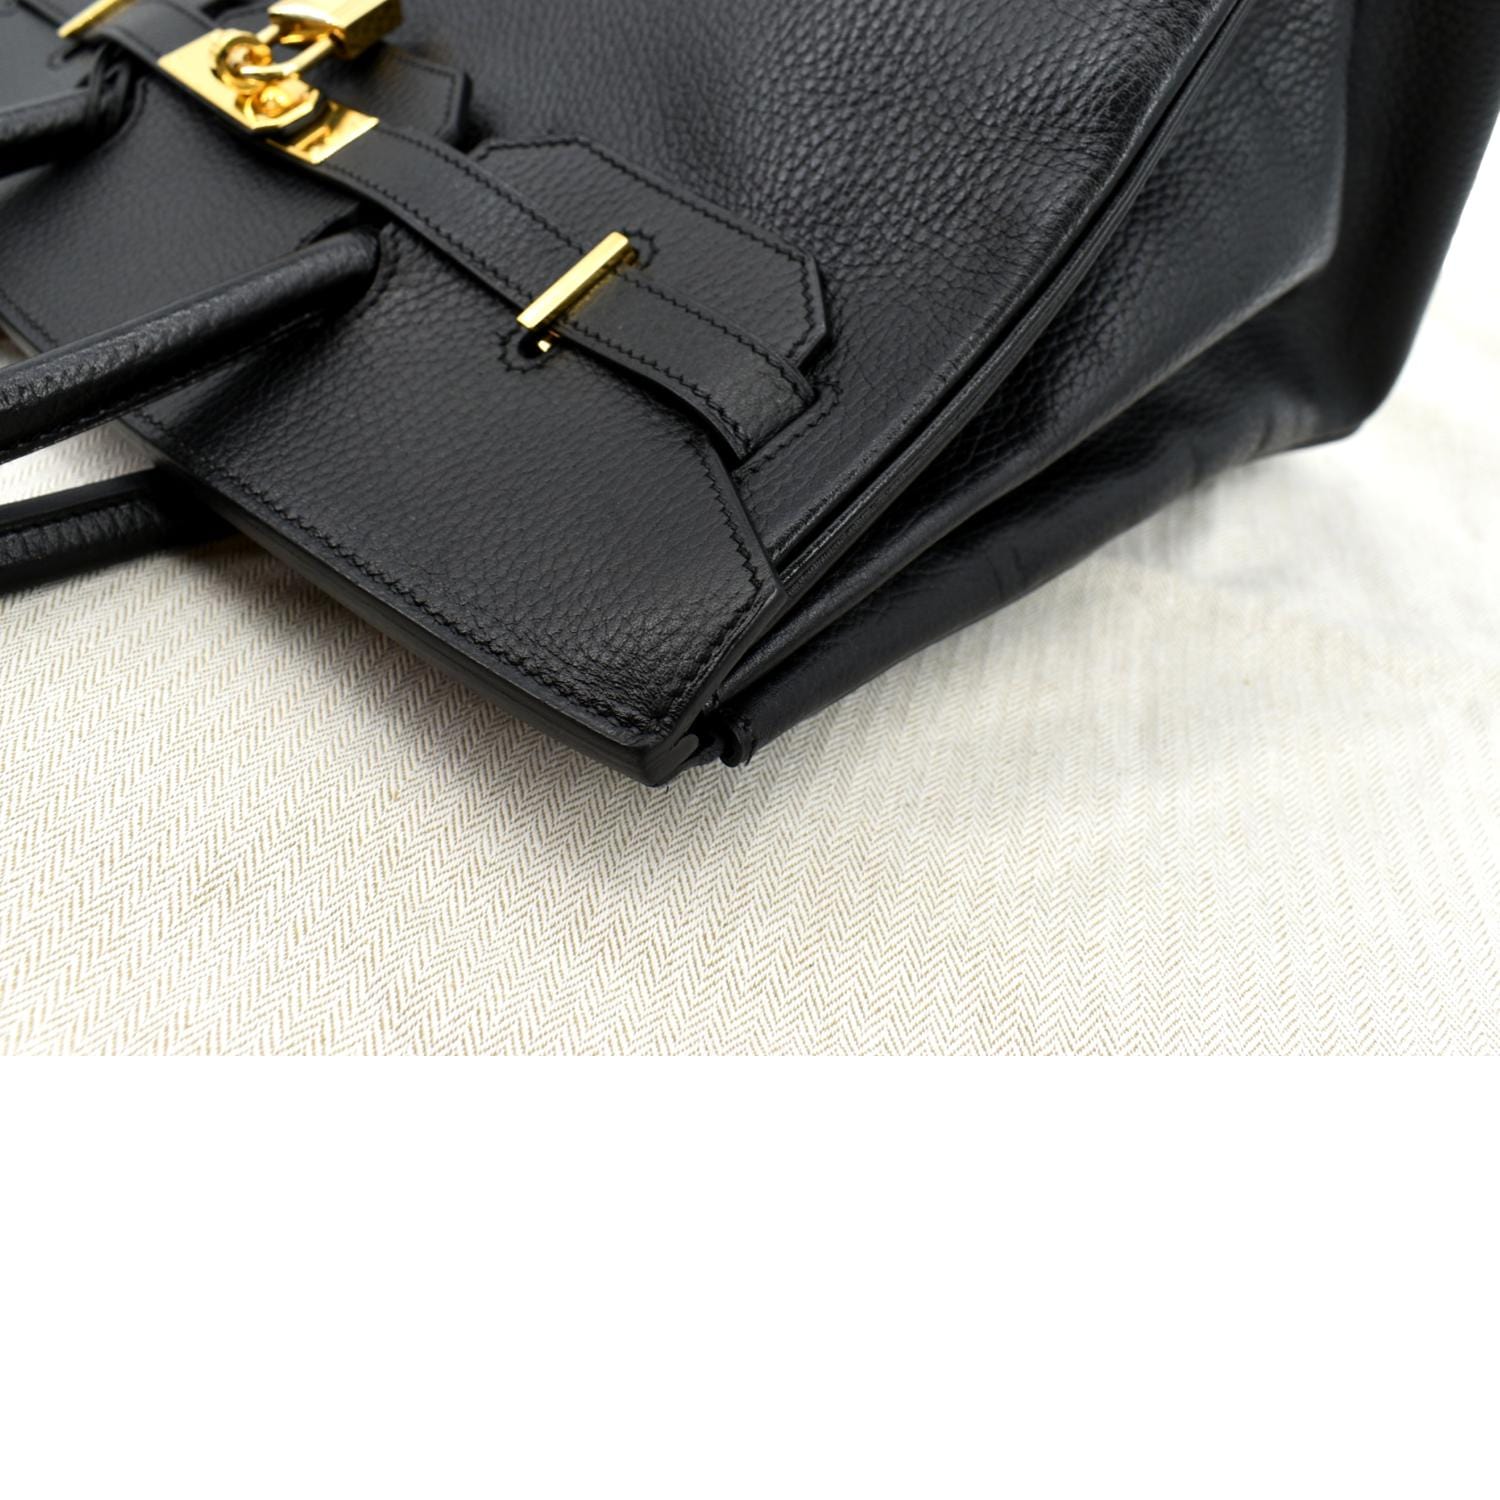 black leather birkin bag